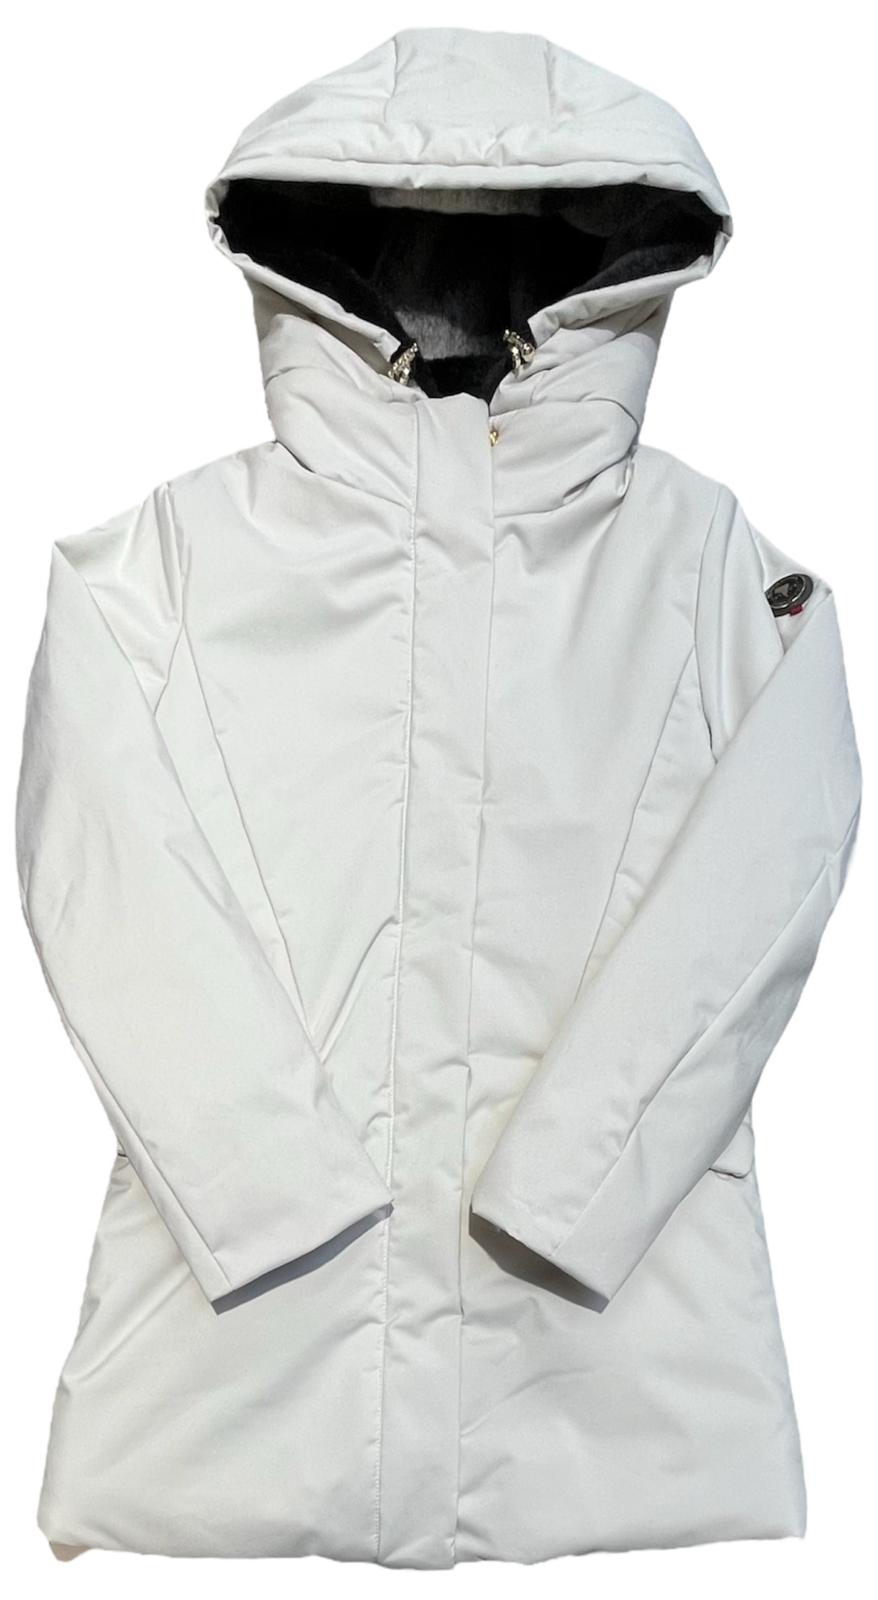 Cape Horn jacket